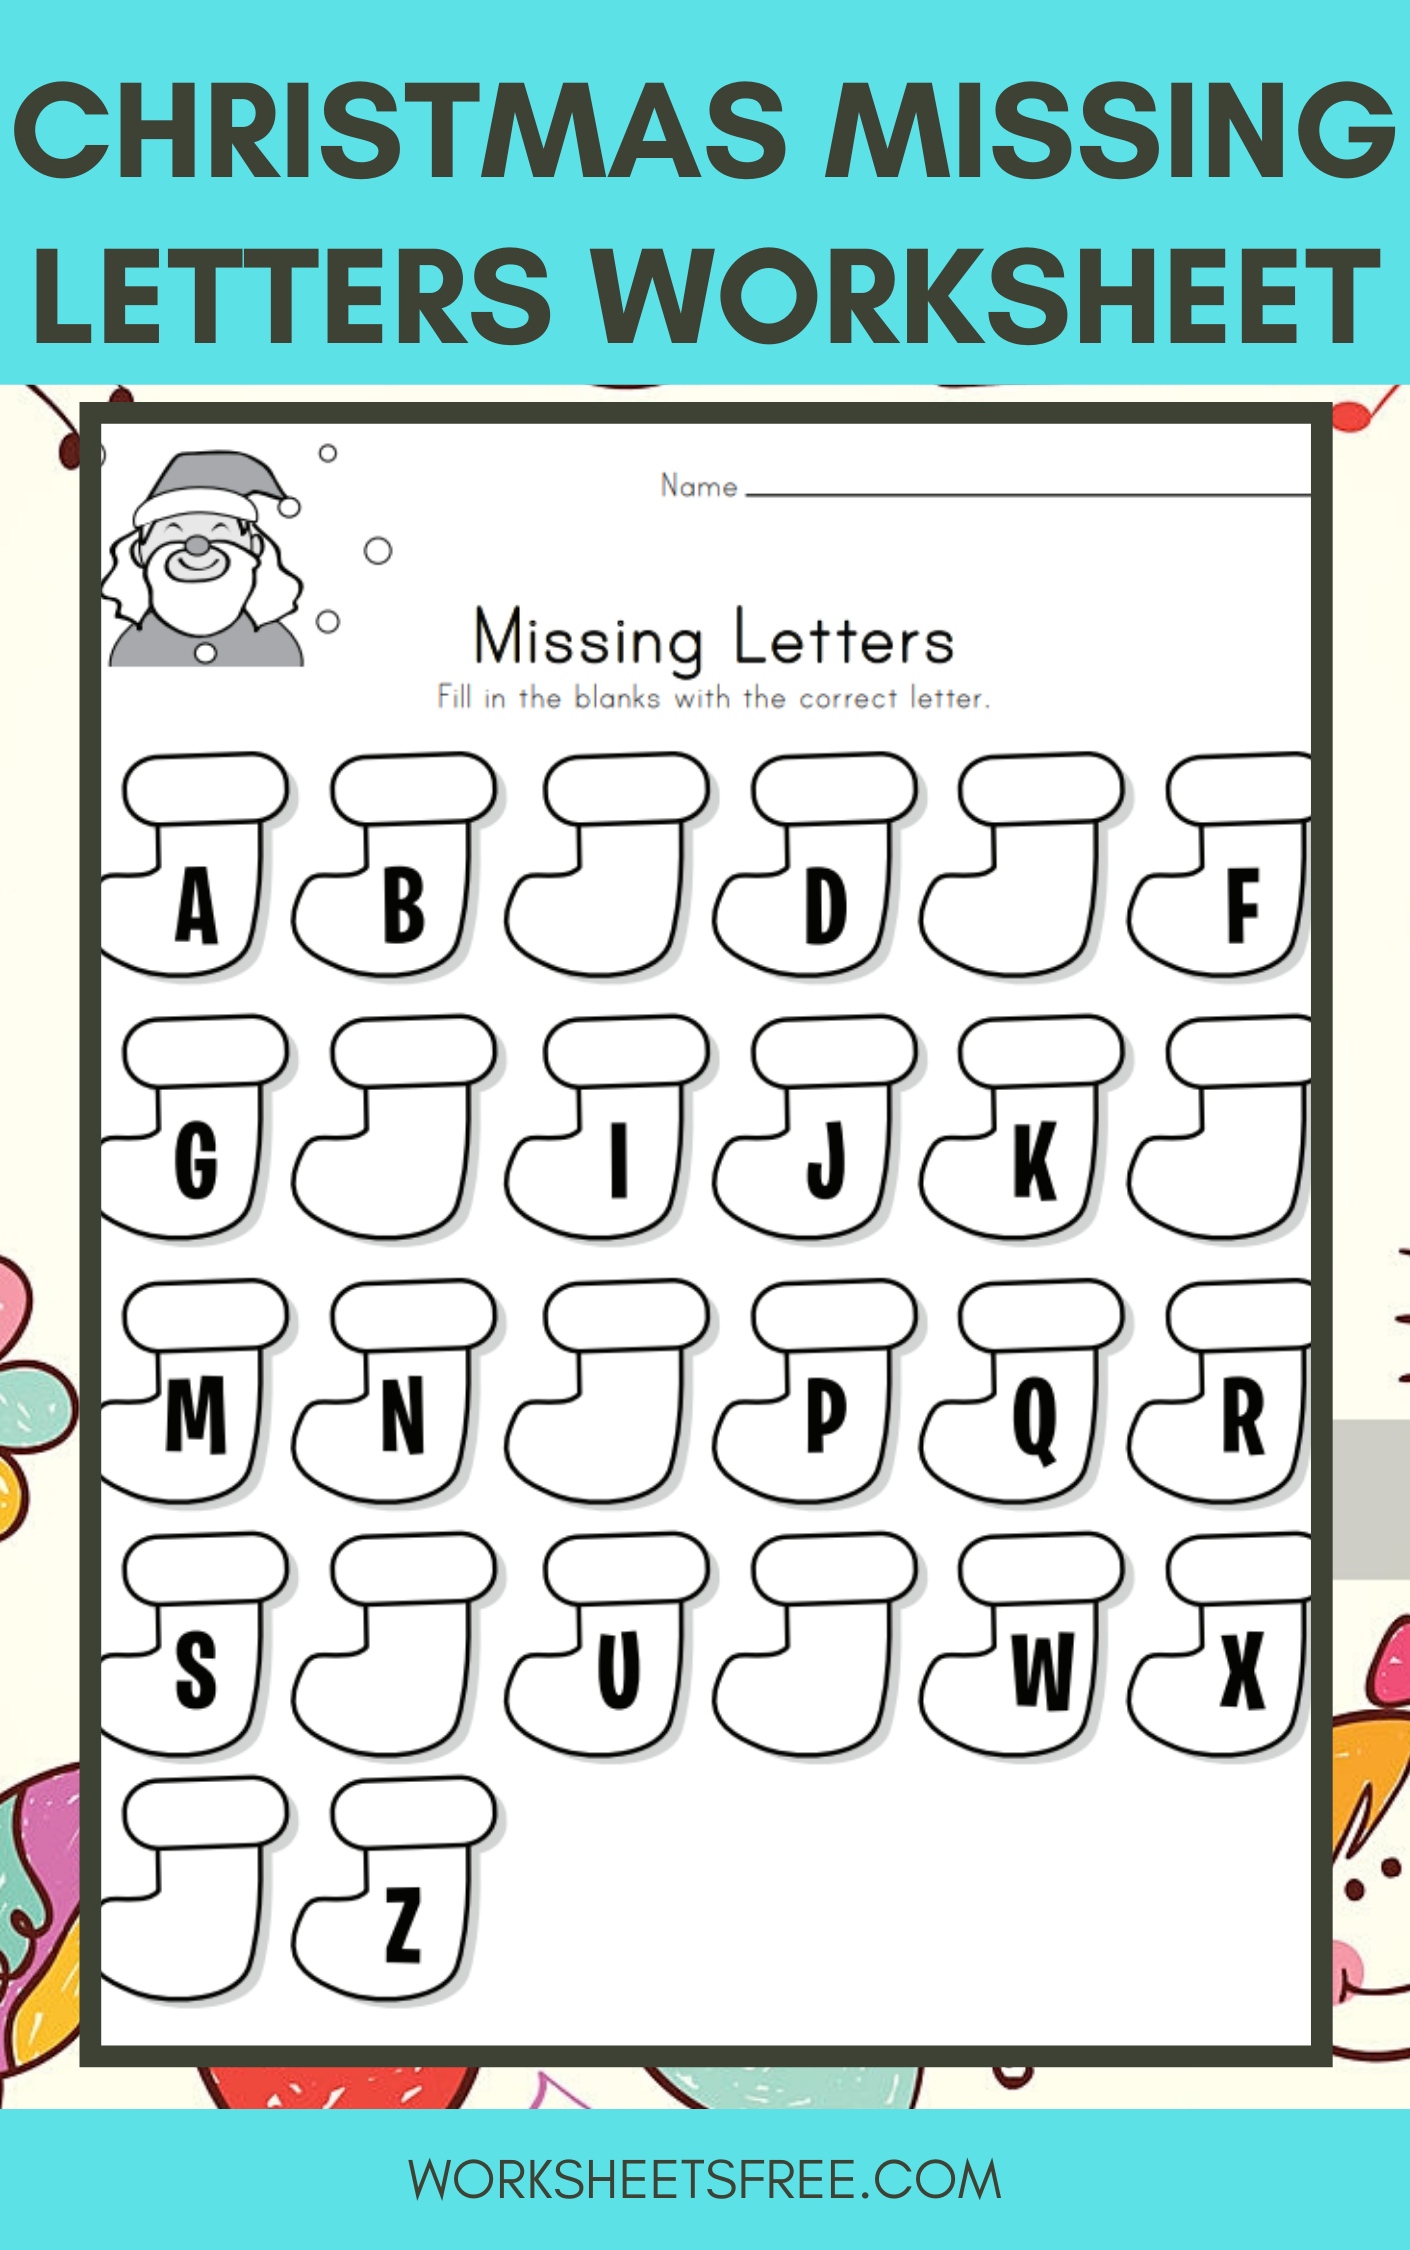 christmas-missing-letters-worksheet-worksheets-free